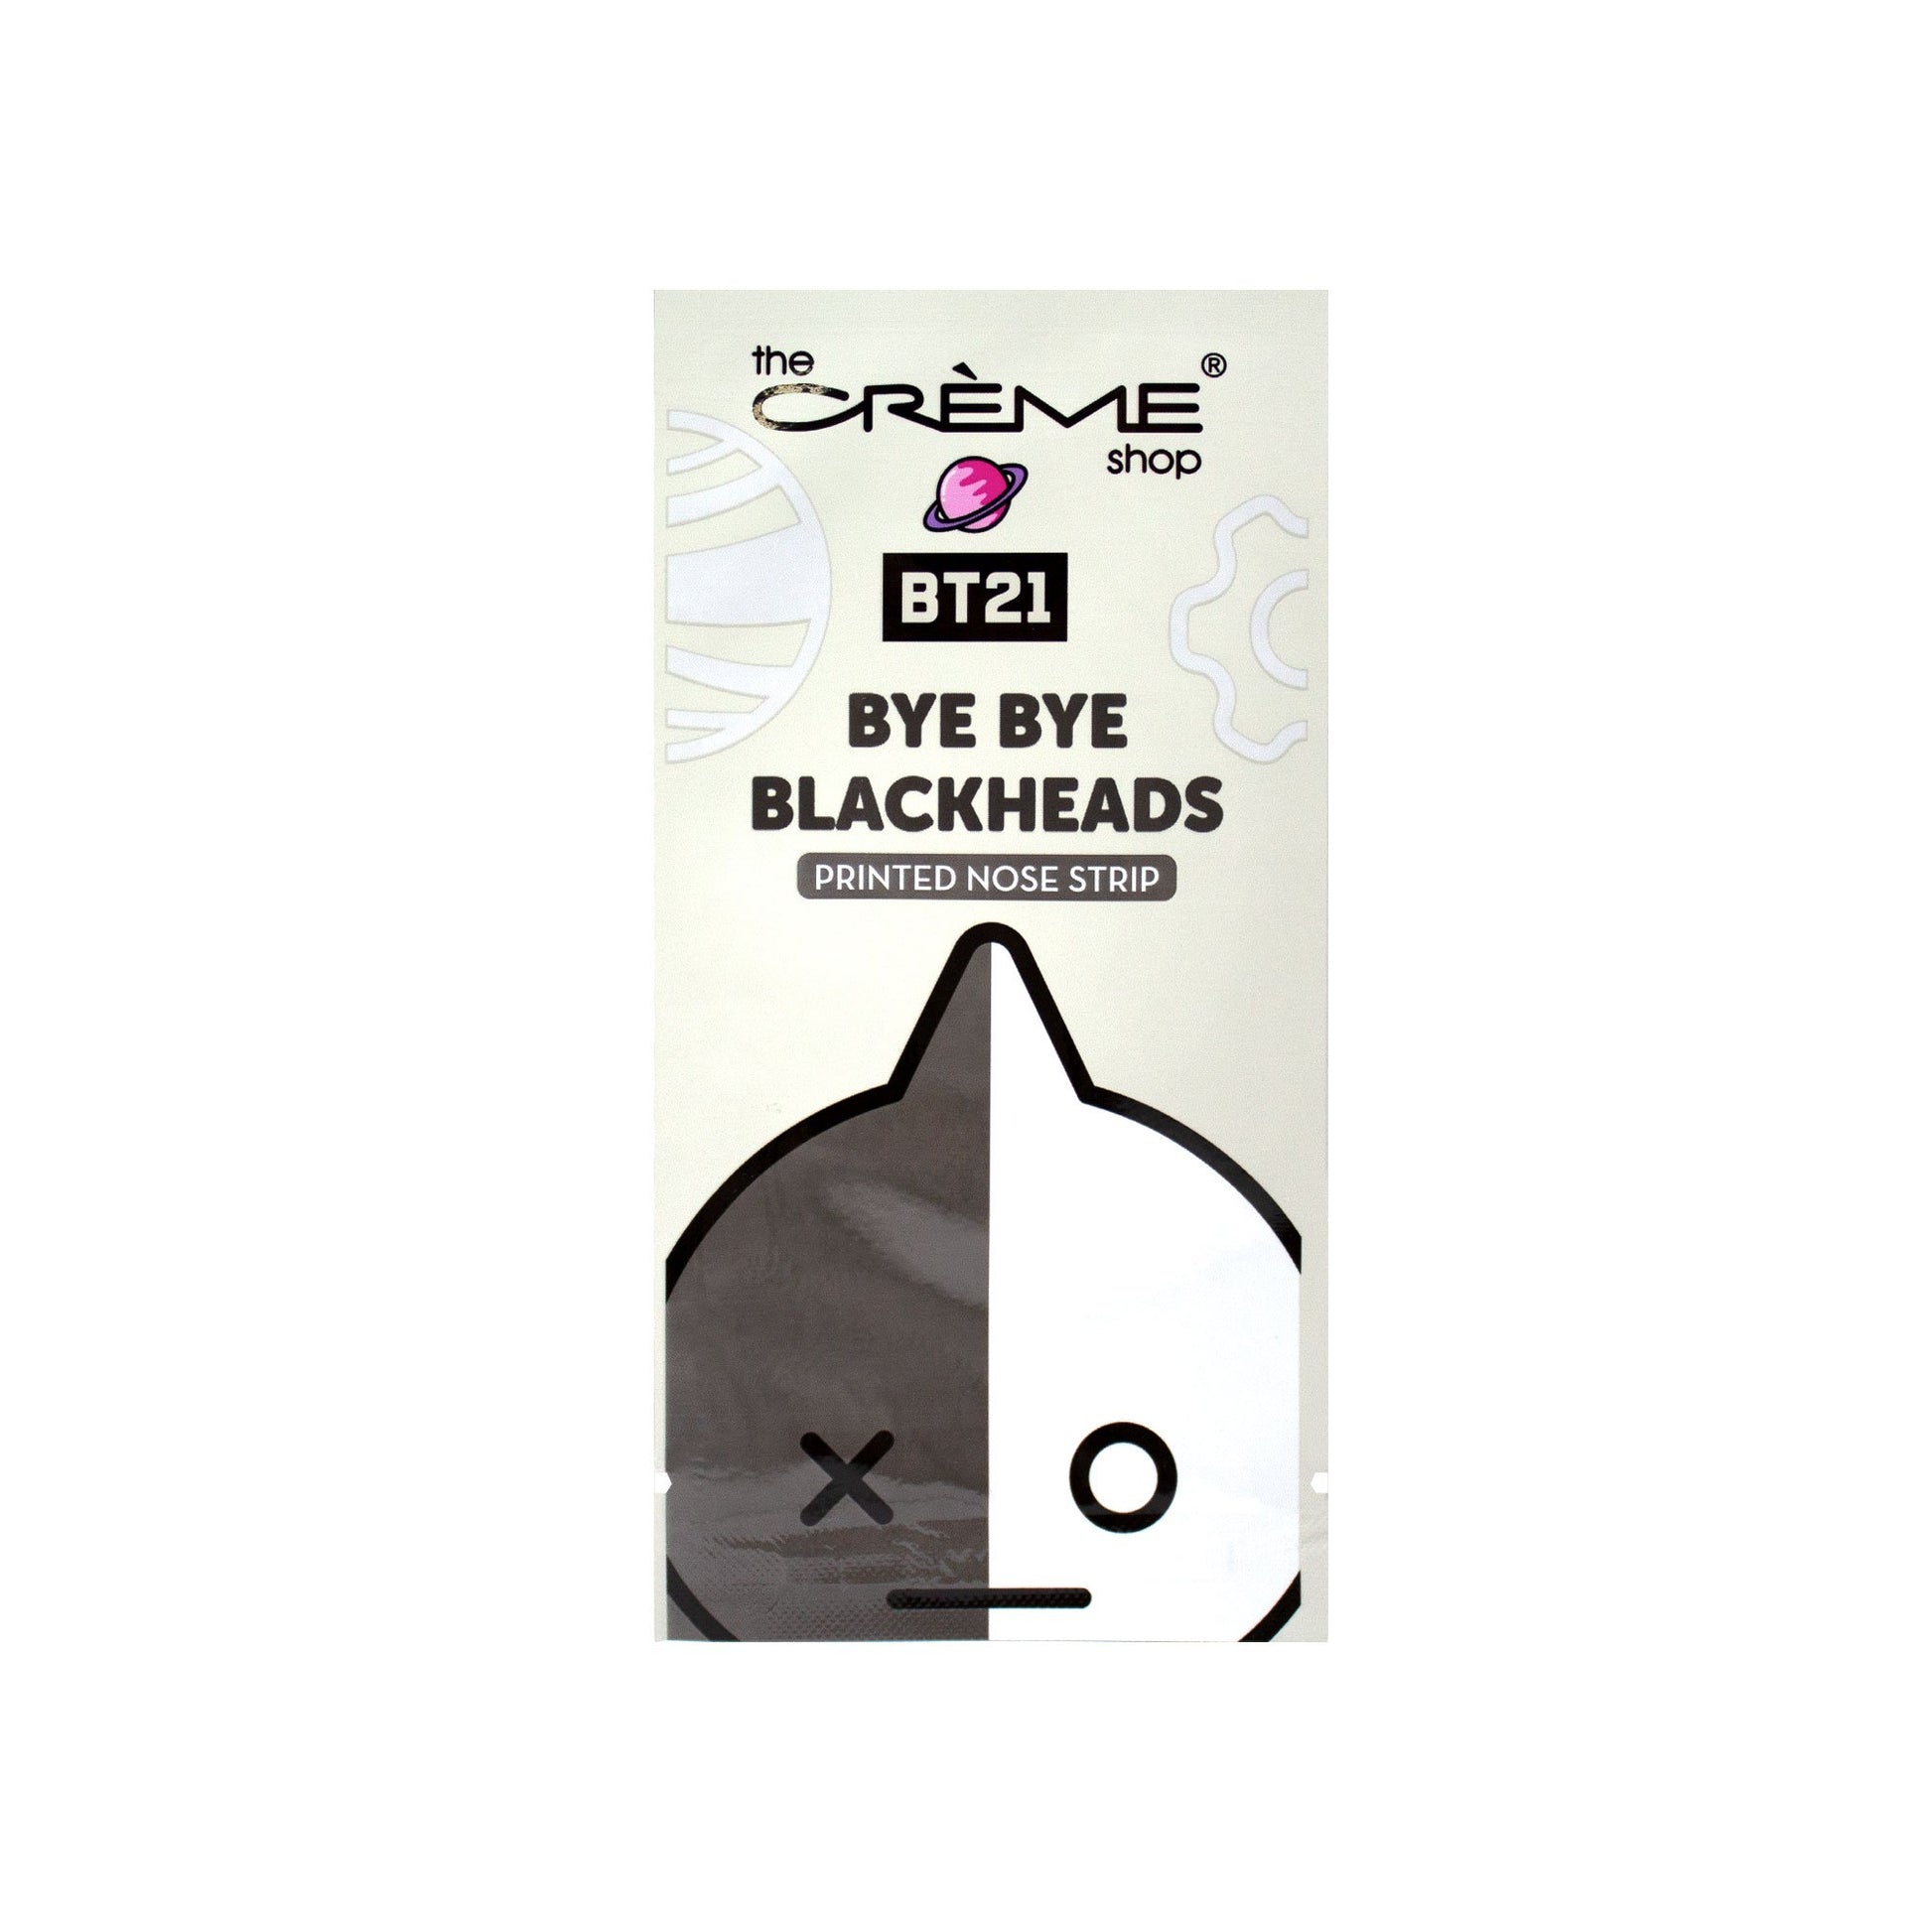 The Crème Shop | BT21: Bye Bye Blackheads - Printed Nose Strips (Set of 16) Blackheads Removers The Crème Shop x BT21 